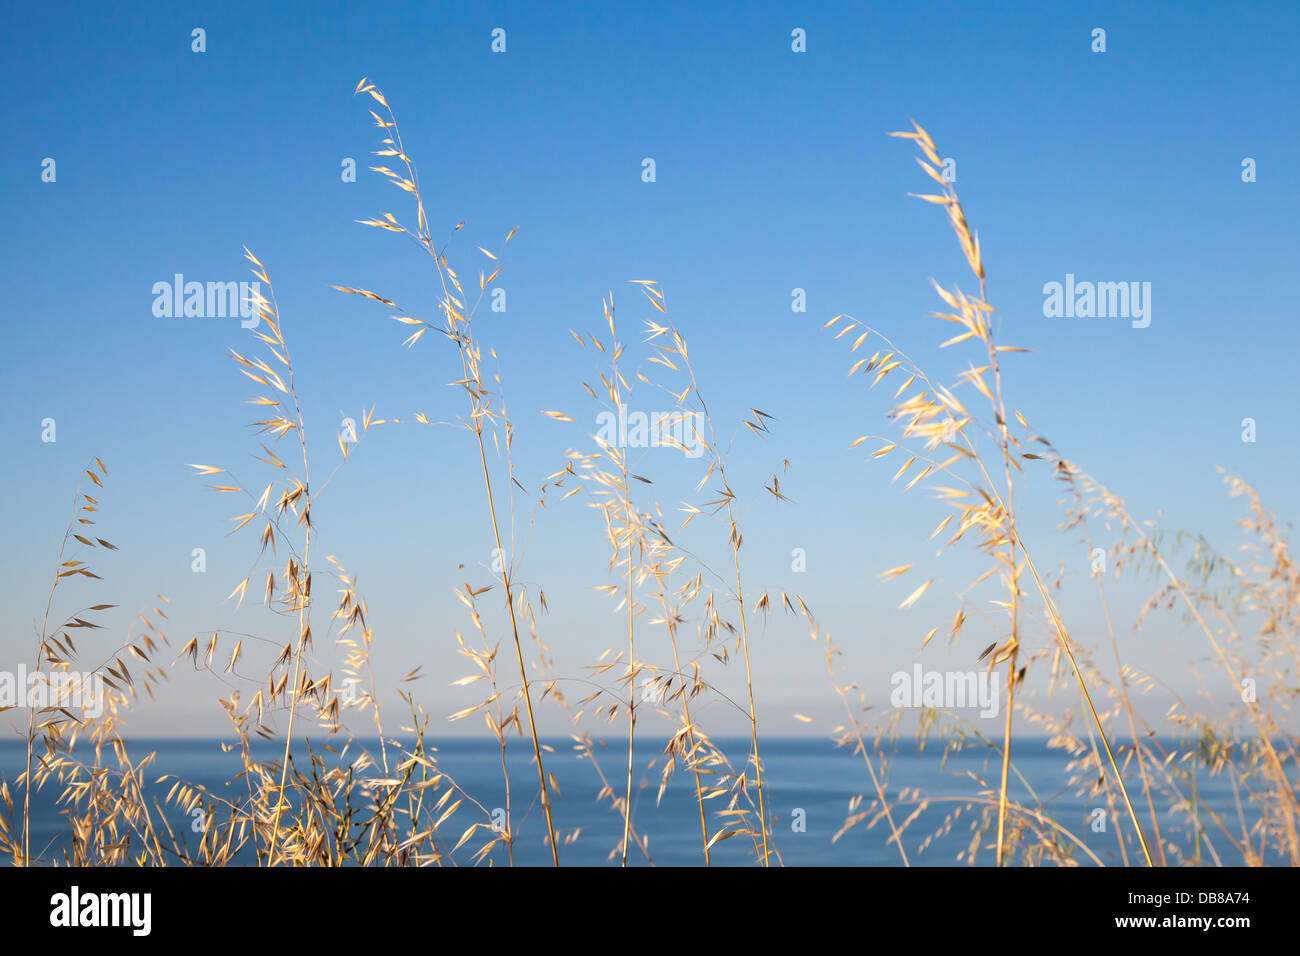 Wild dry coastal grass above blue sky and sea. Macro photo with selective focus Stock Photo